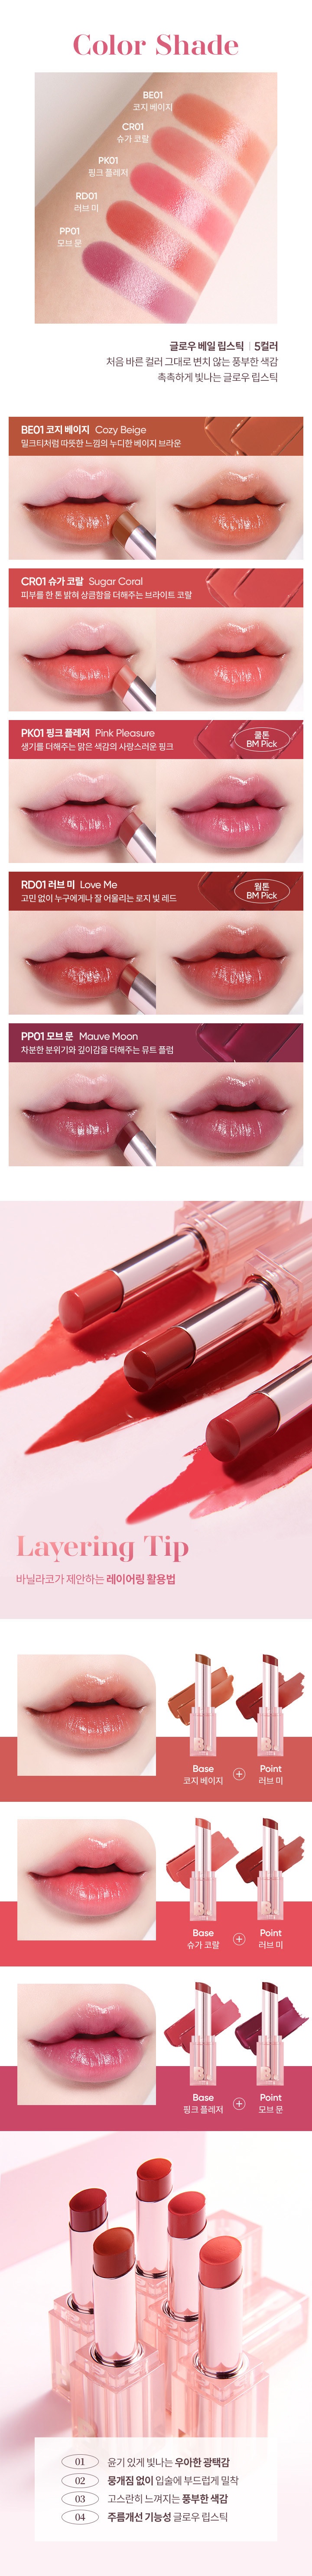 Banila Co Glow Veil Lipstick korean skincare product online shop malaysia china usa3